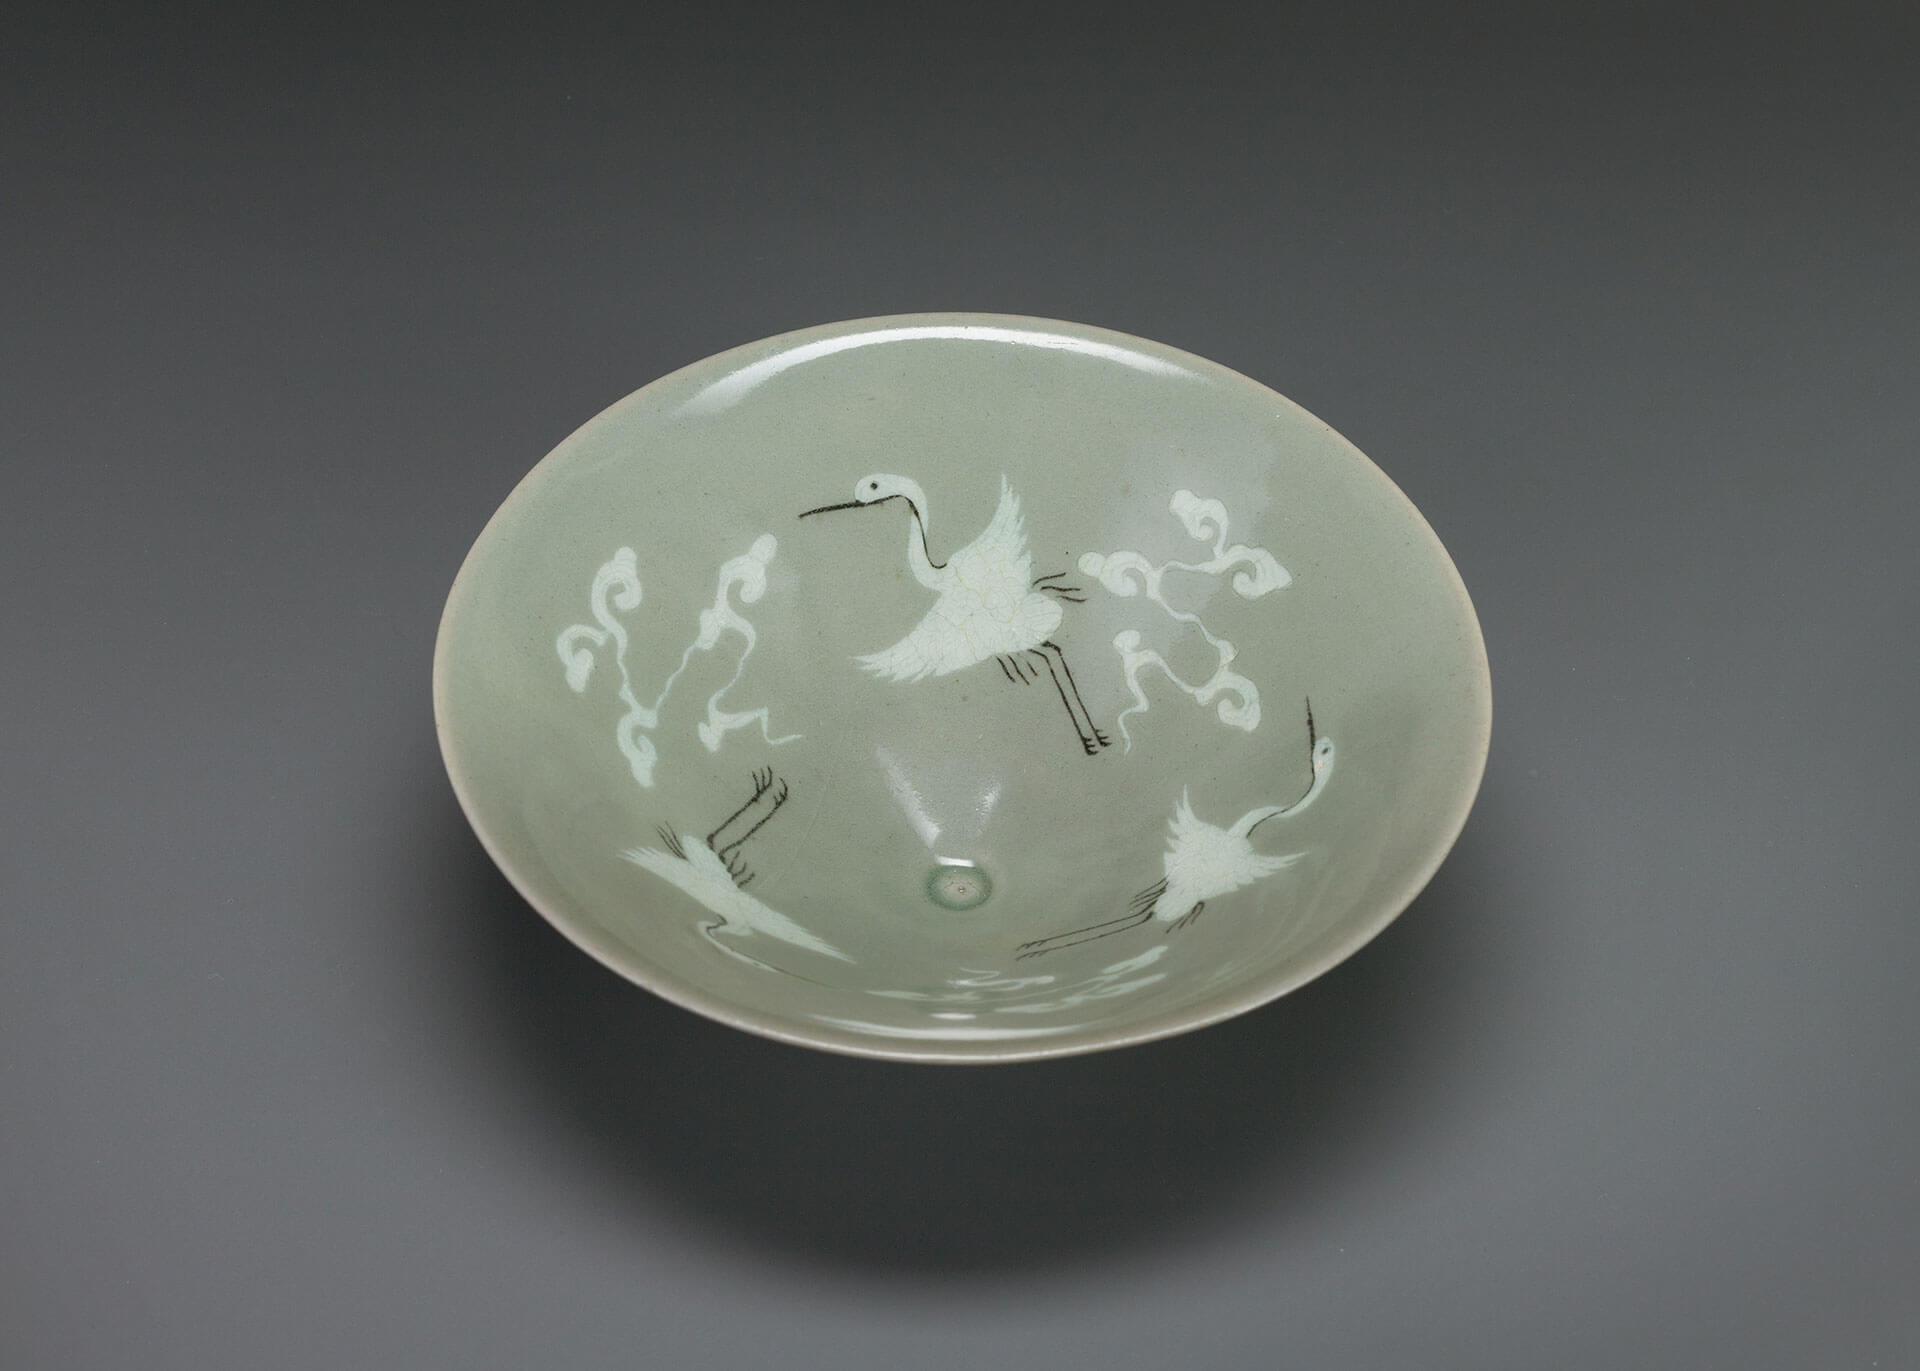 Bowl with inlaid cloud and crane design against celadon glaze